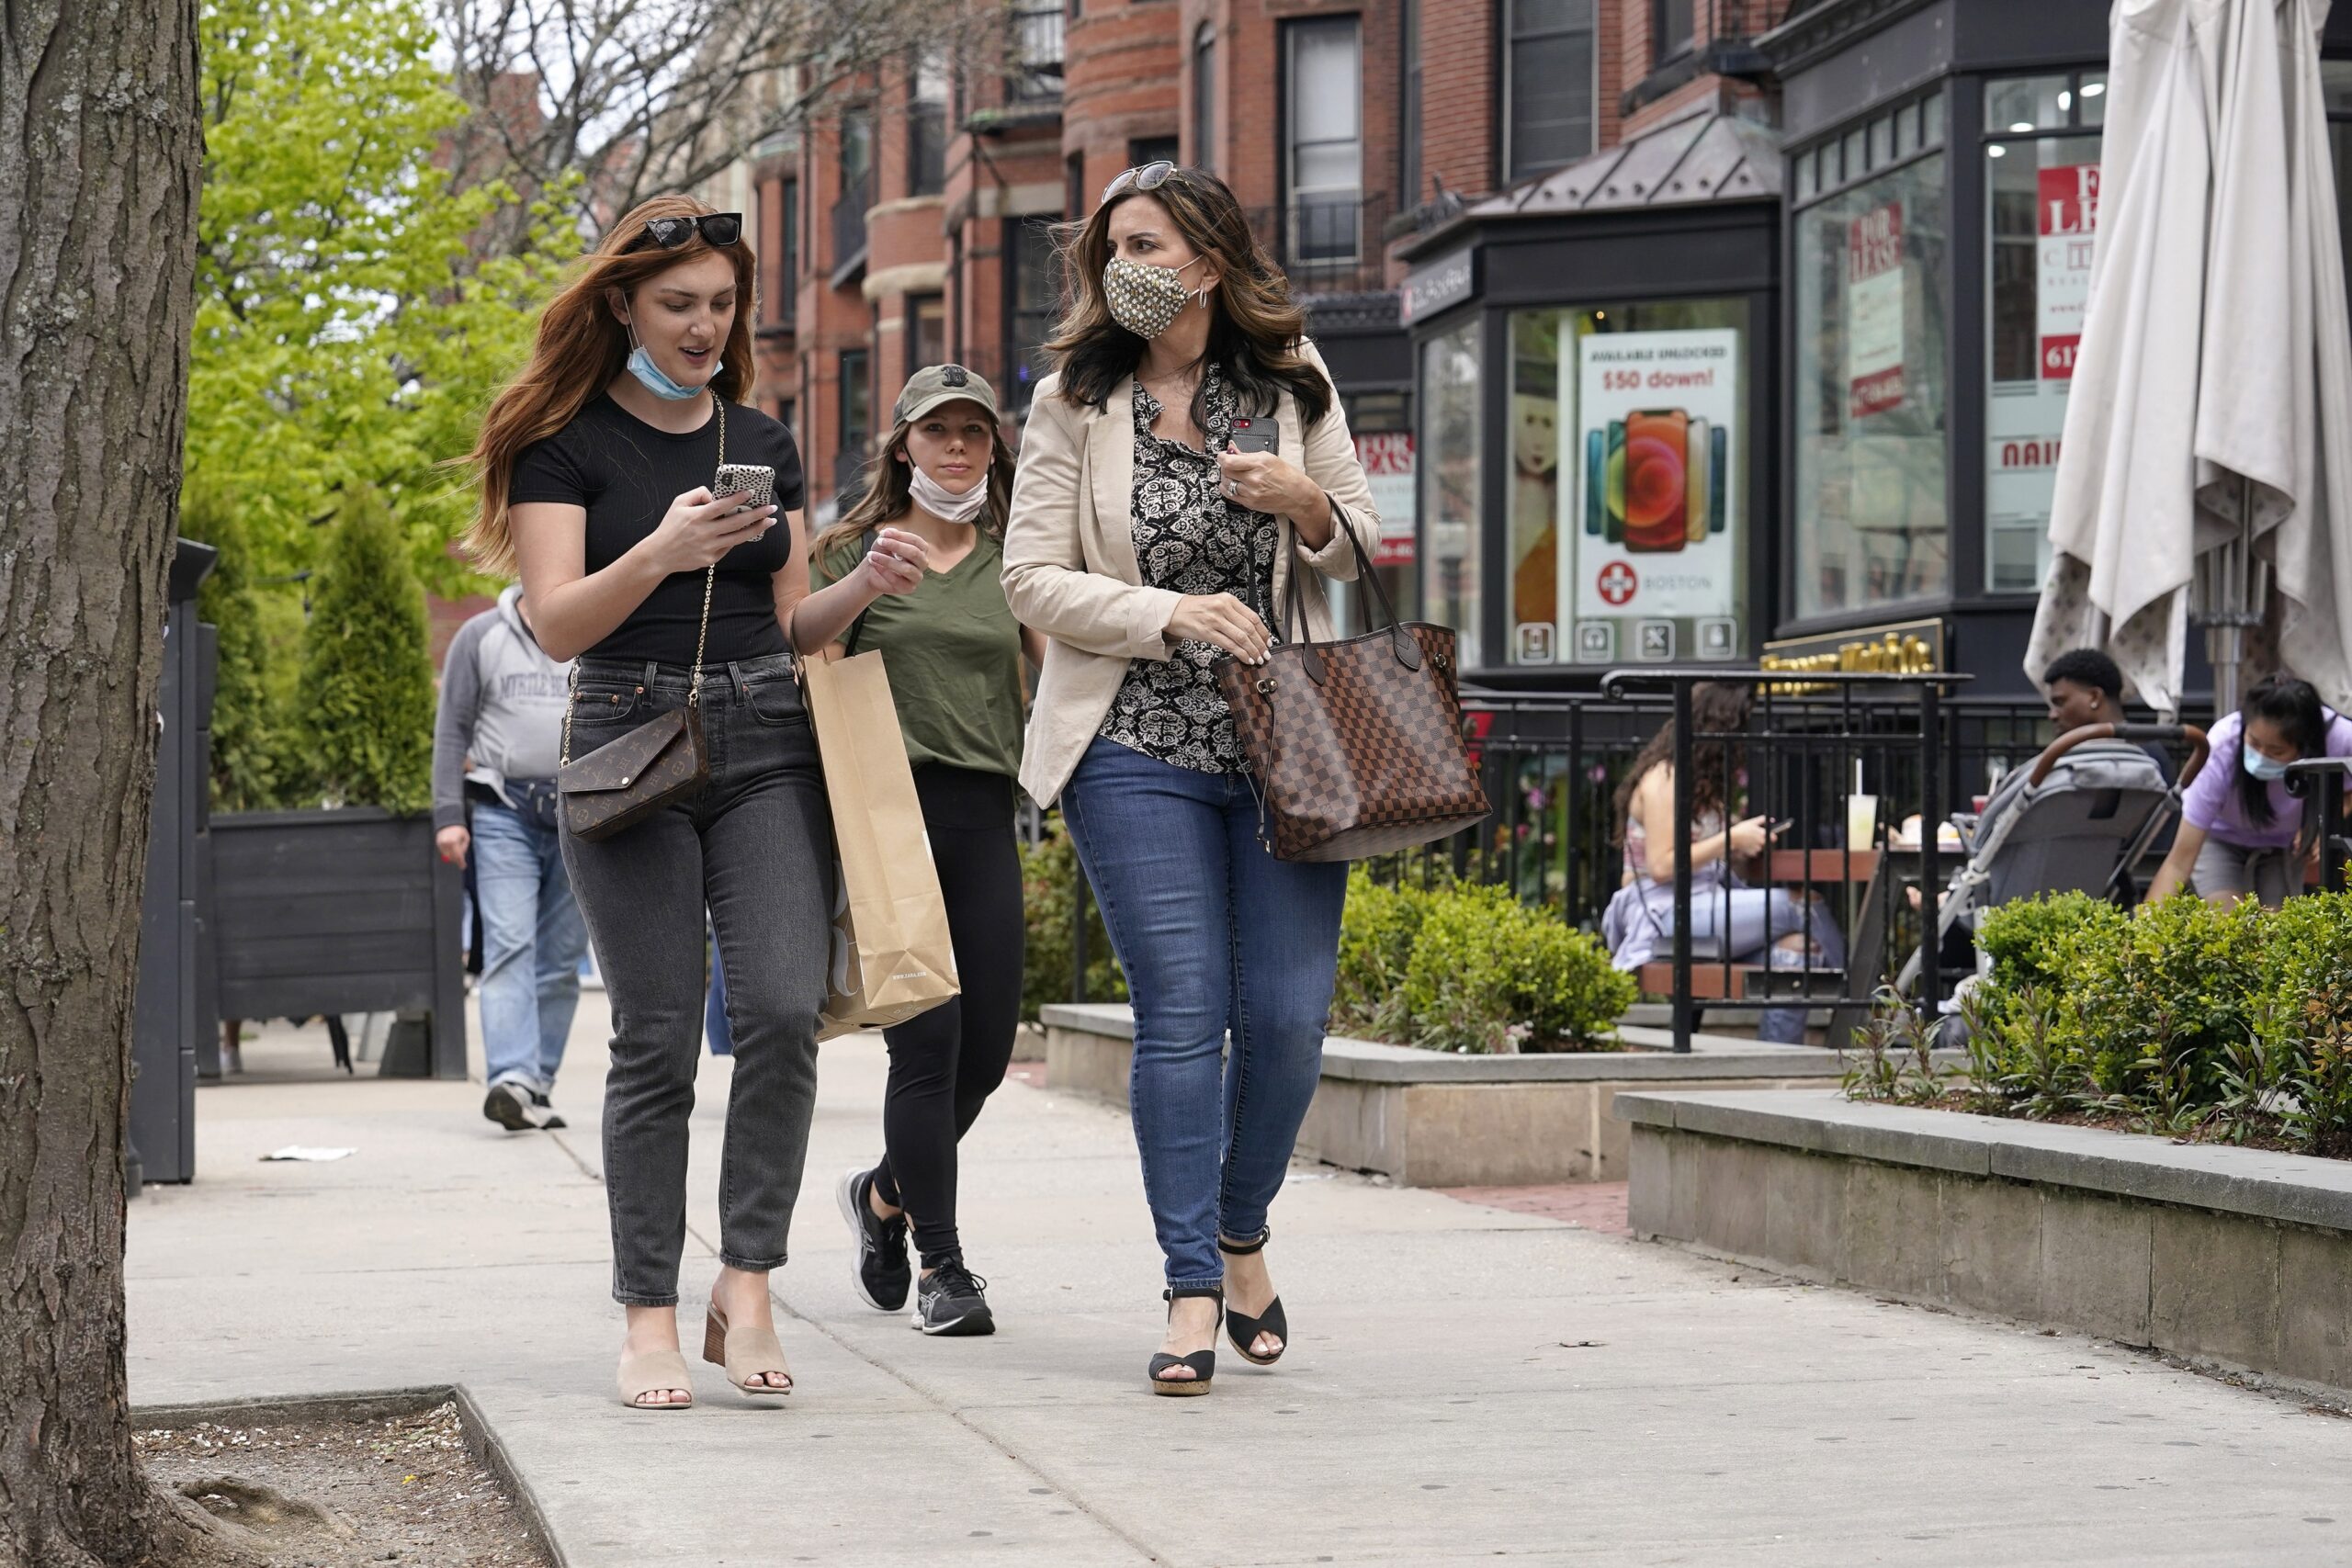 Pedestrians walk along Boston's fashionable Newbury Street